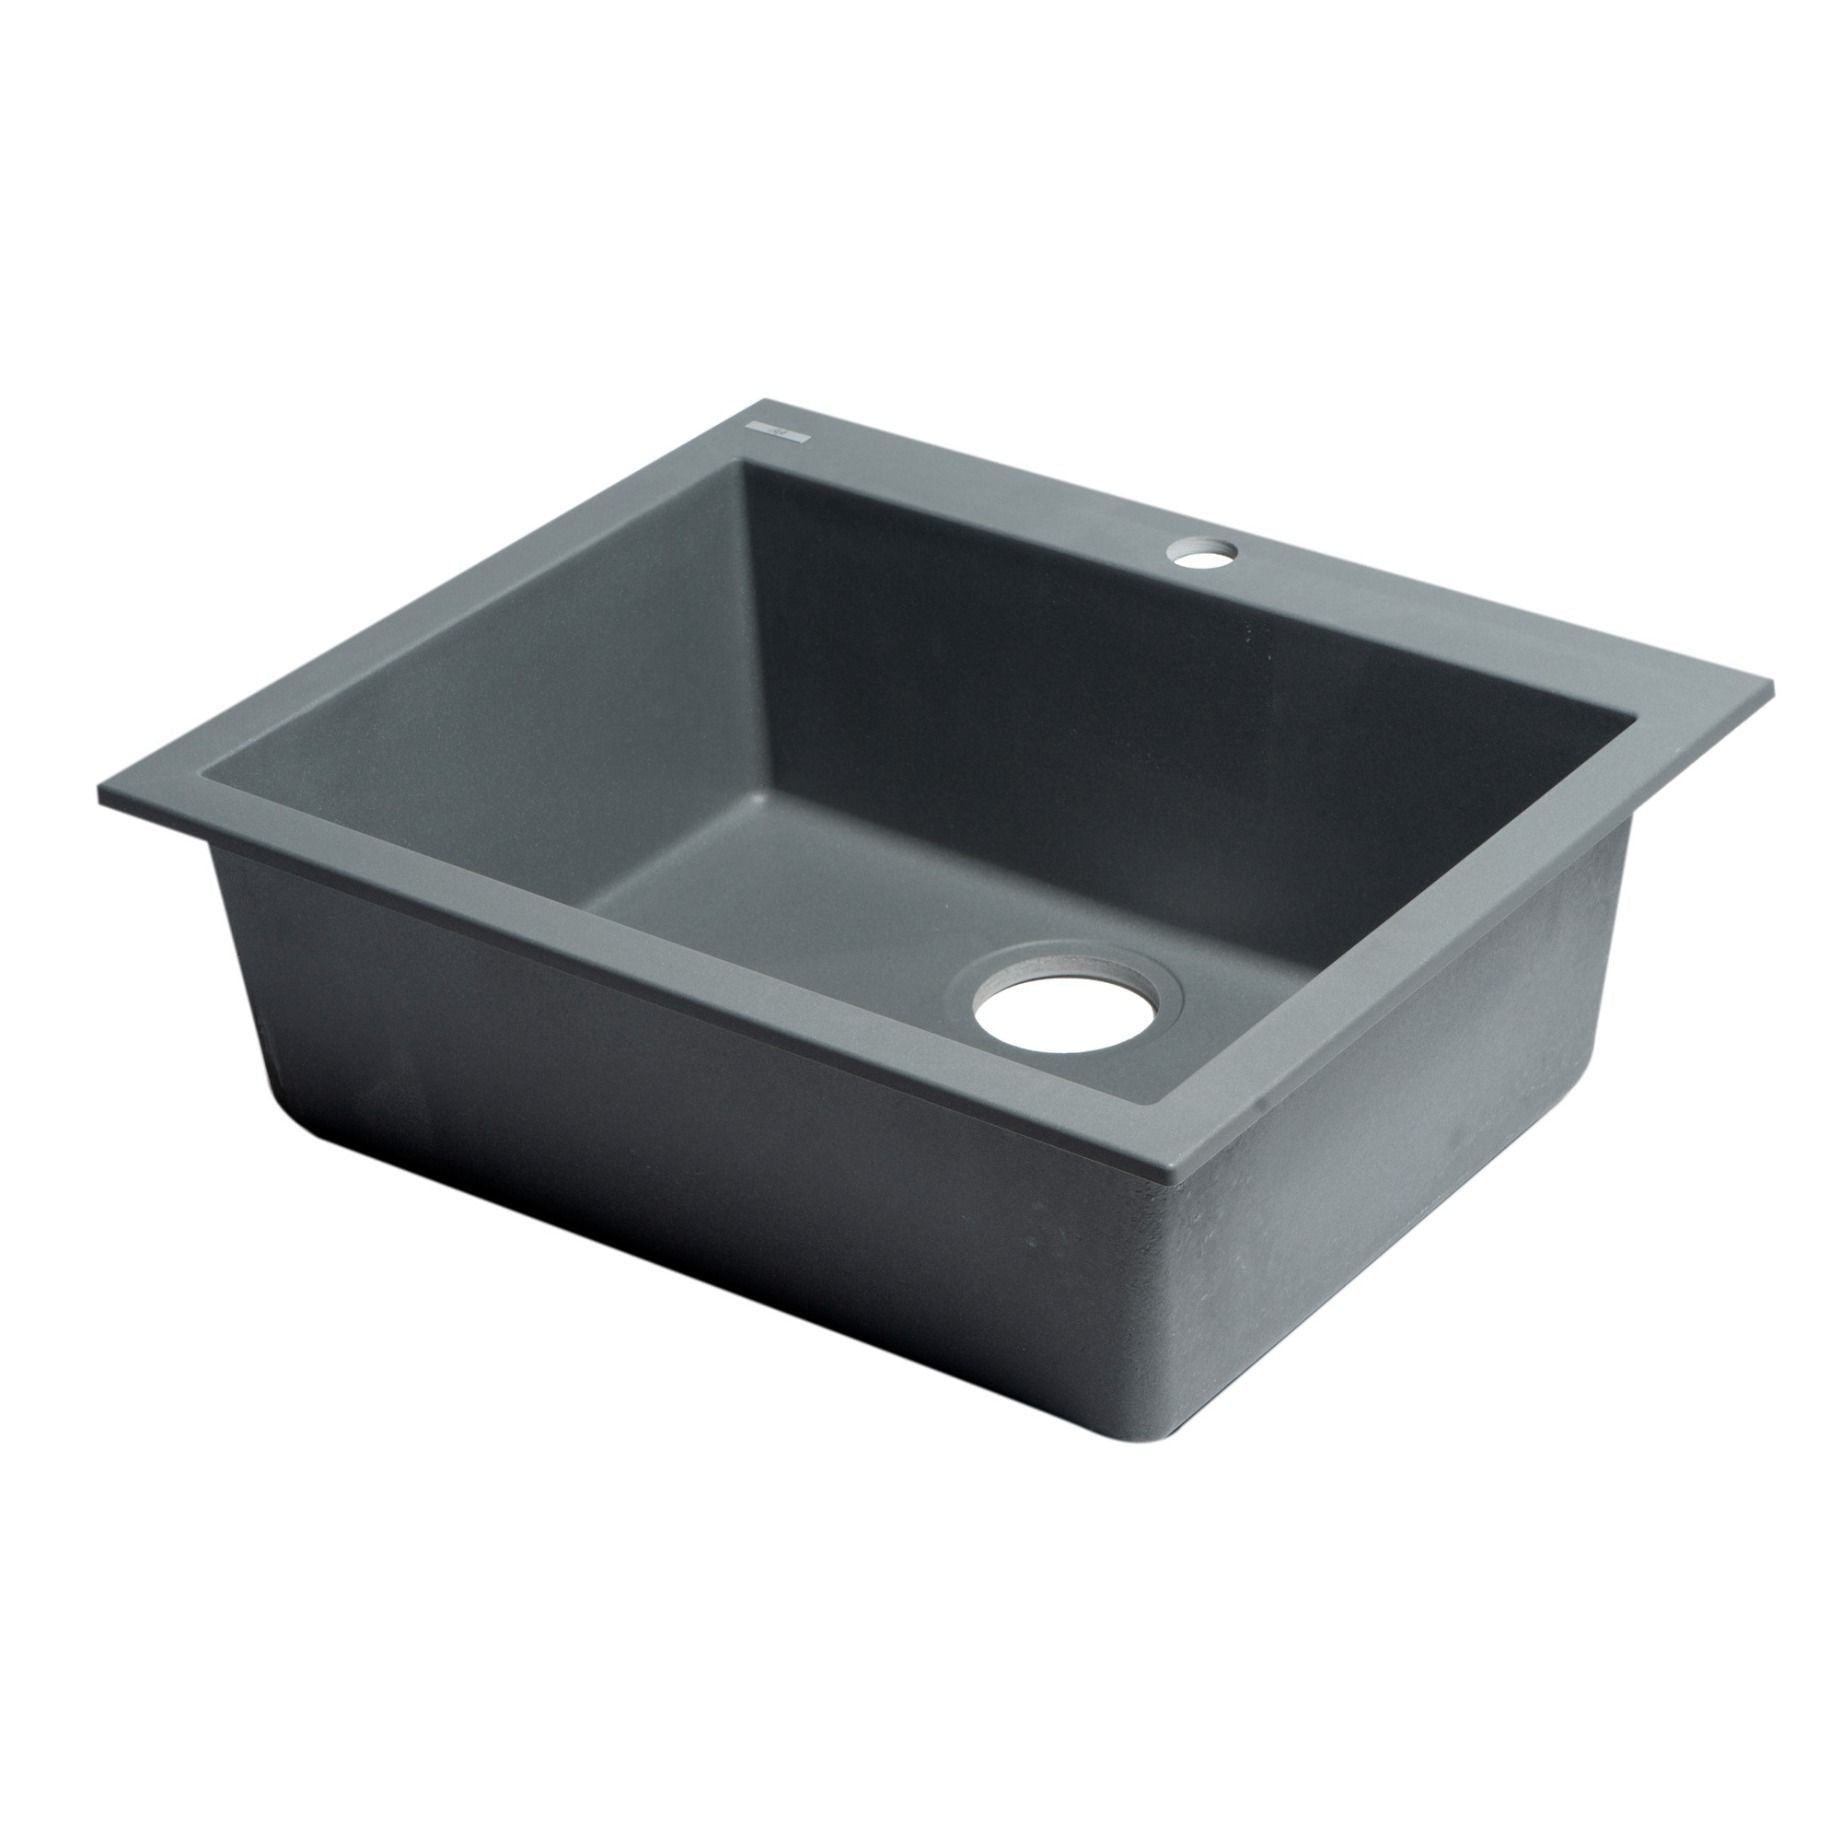 ALFI Brand AB2420DI-T Titanium 24" Drop-In Single Bowl Granite Composite Kitchen Sink